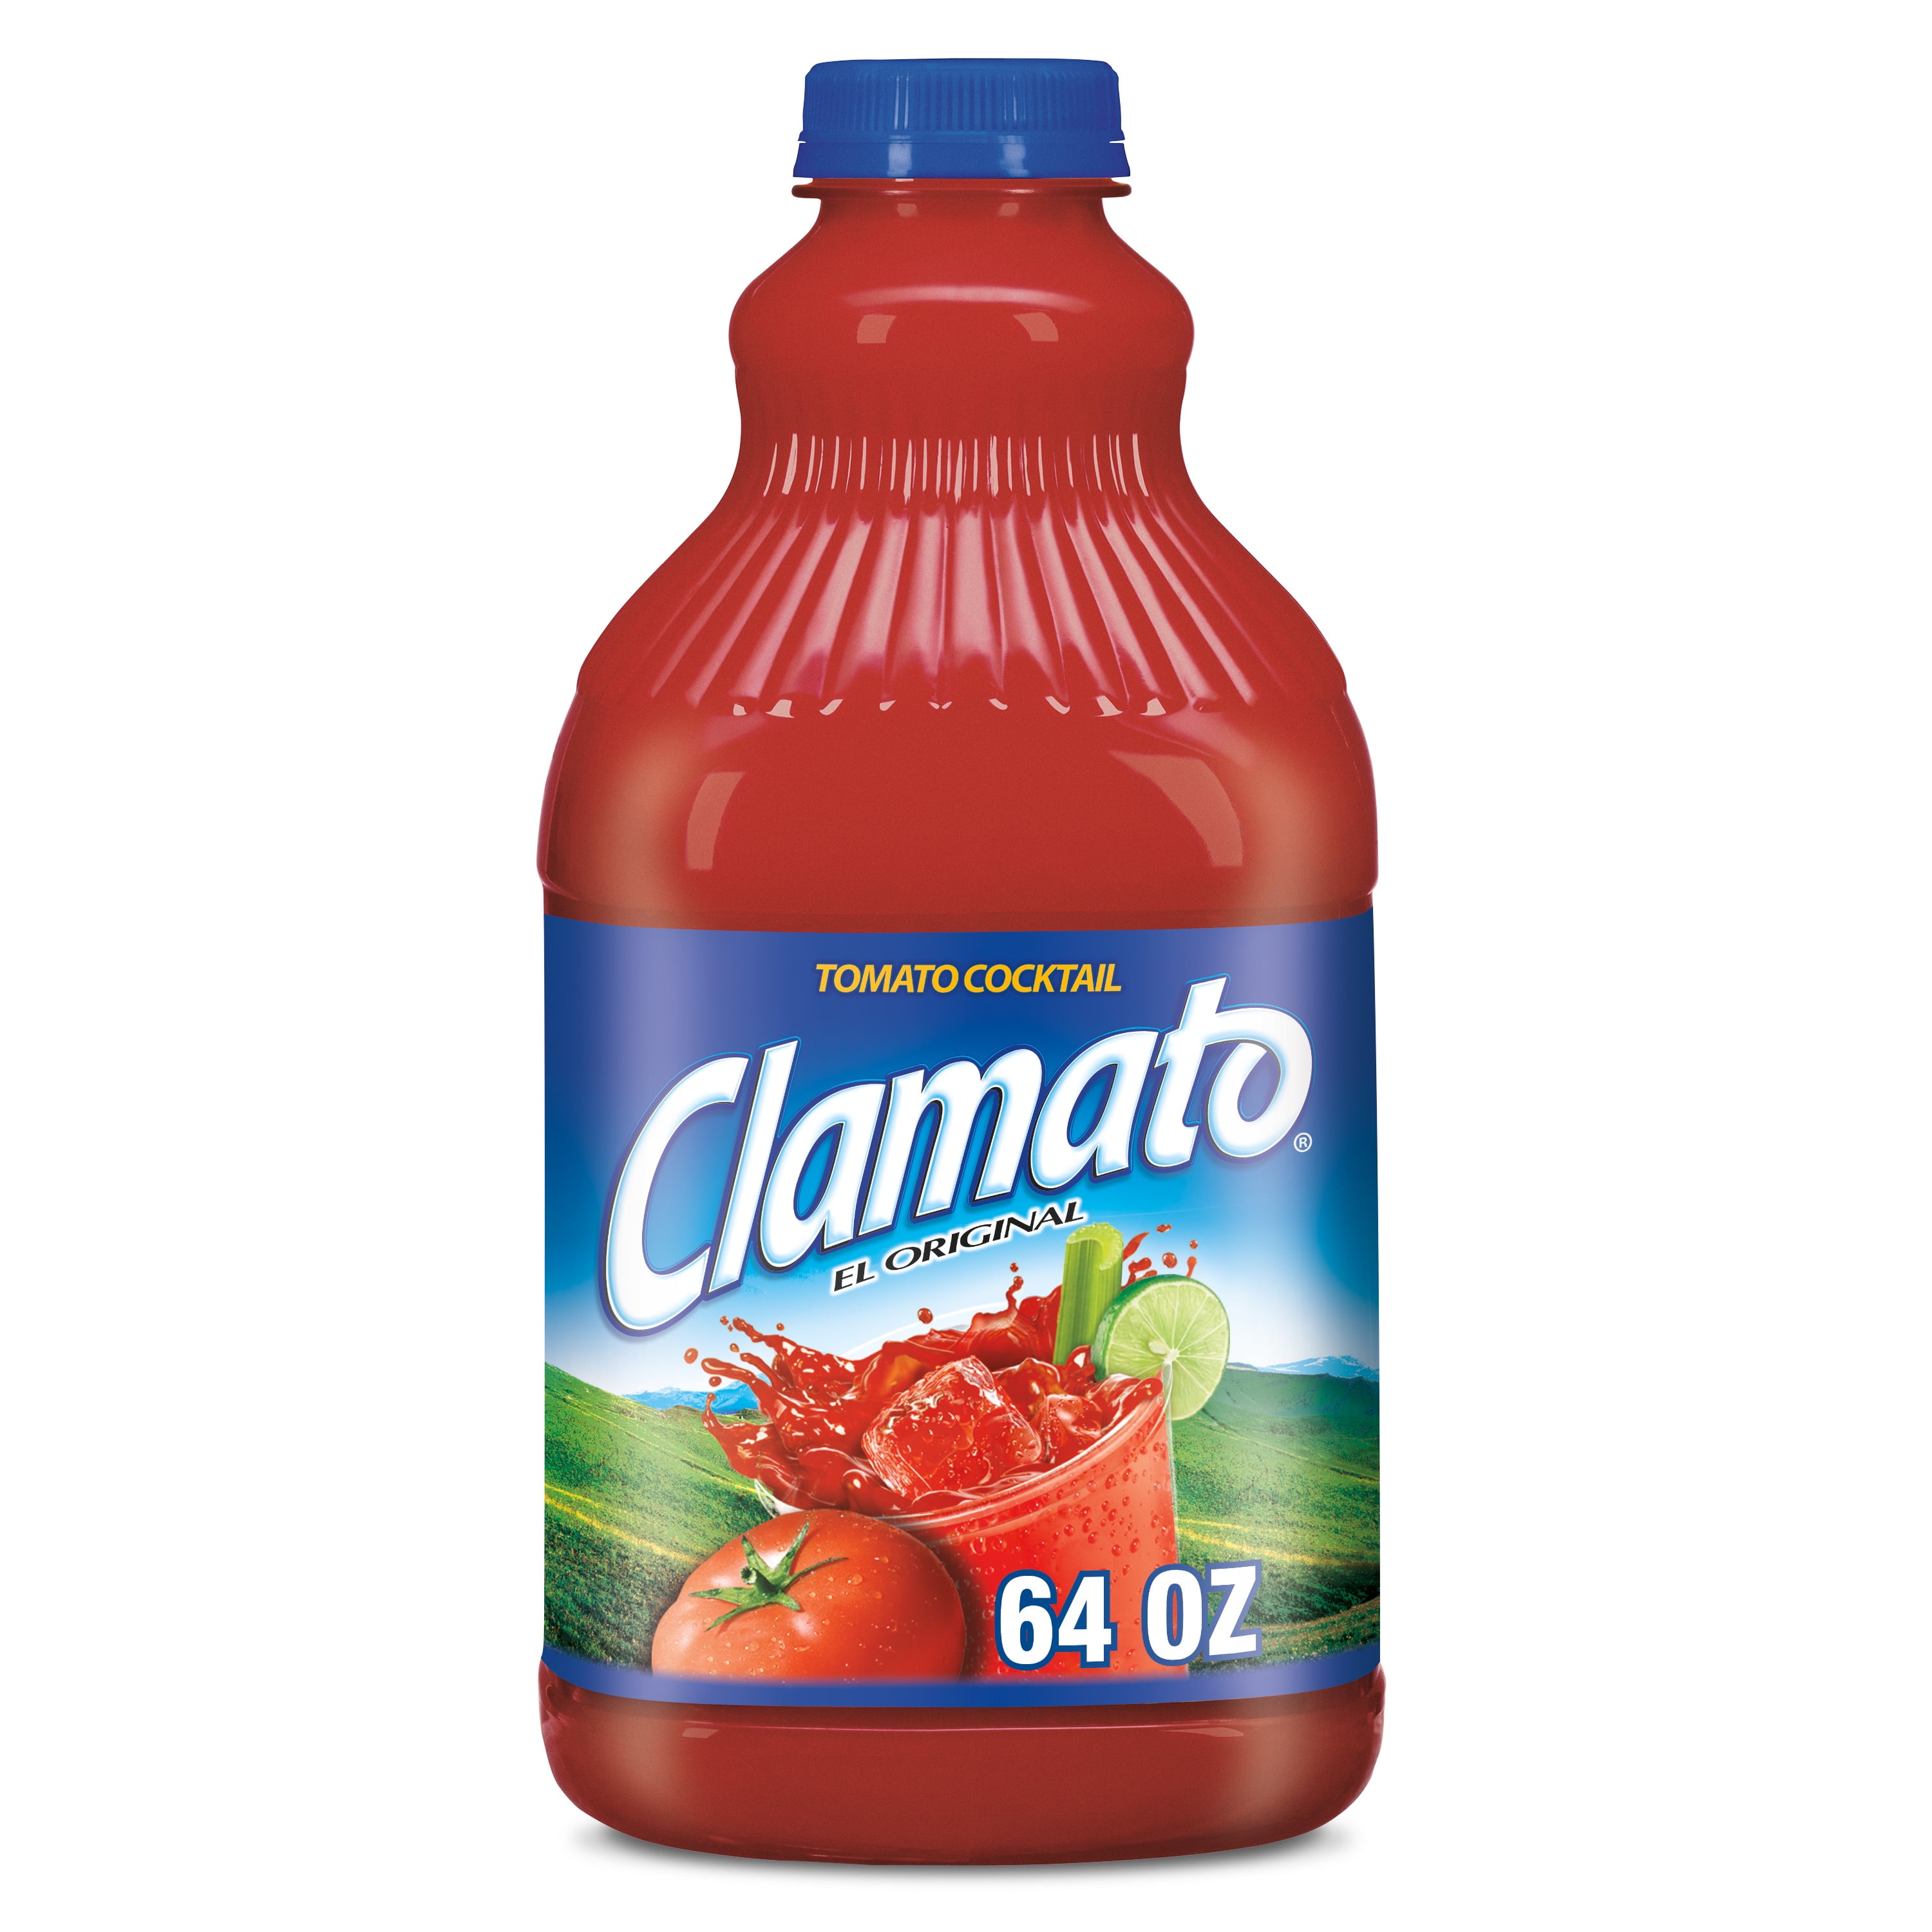 Clamato Original Tomato Cocktail, 64 fl oz bottle